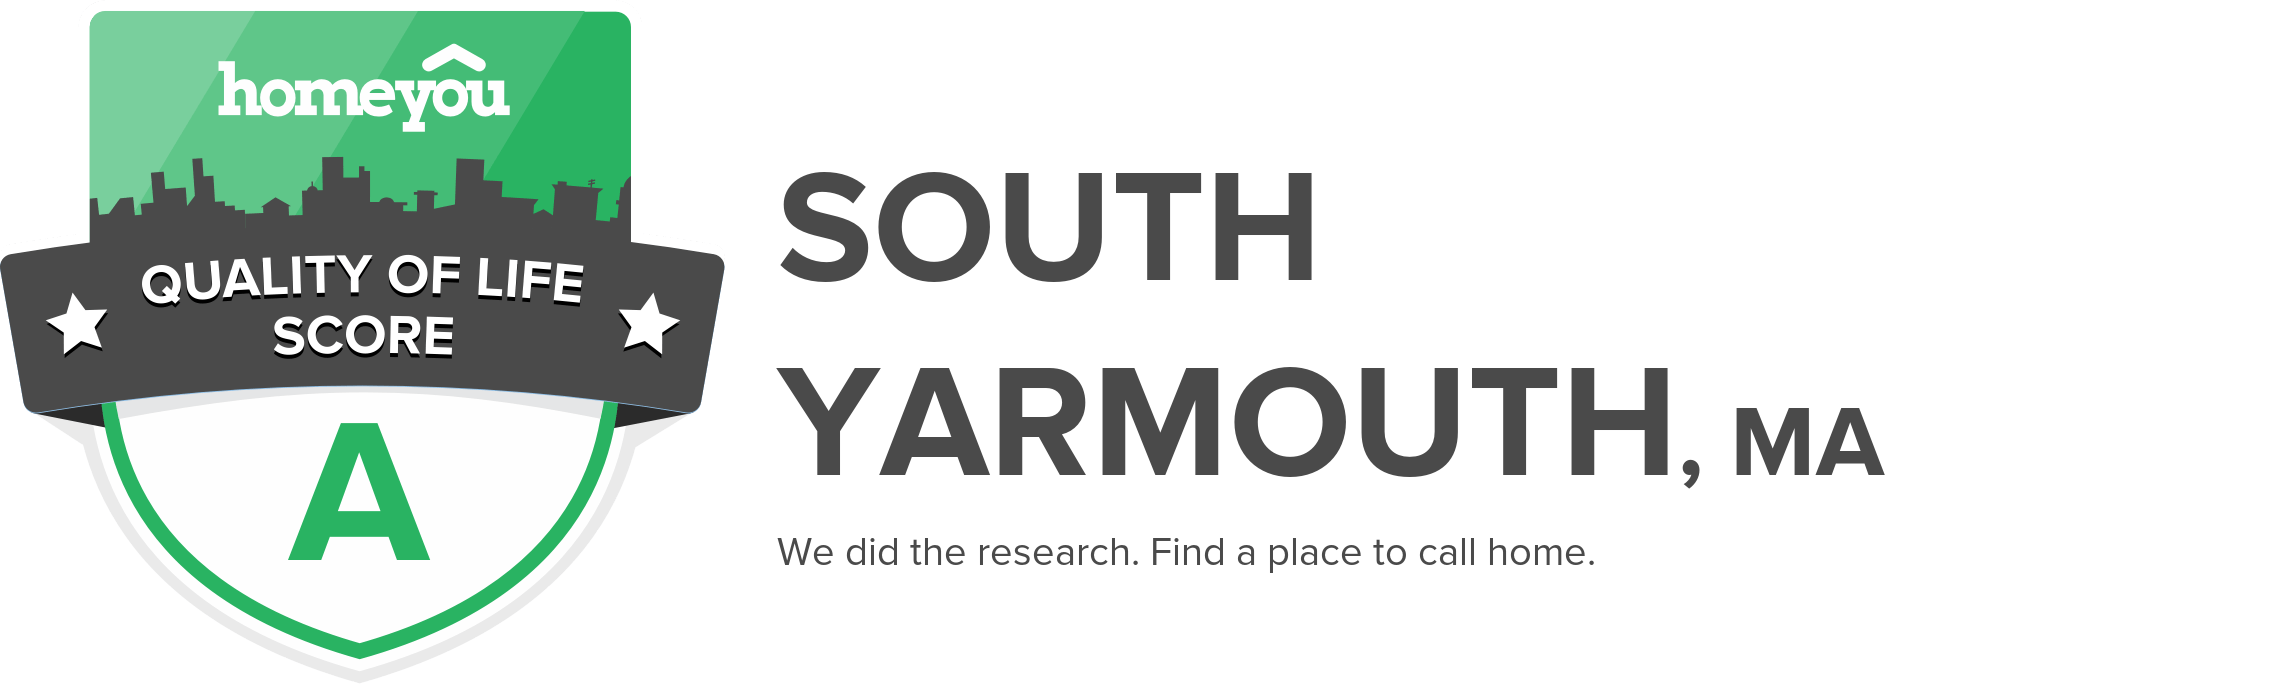 South Yarmouth, MA